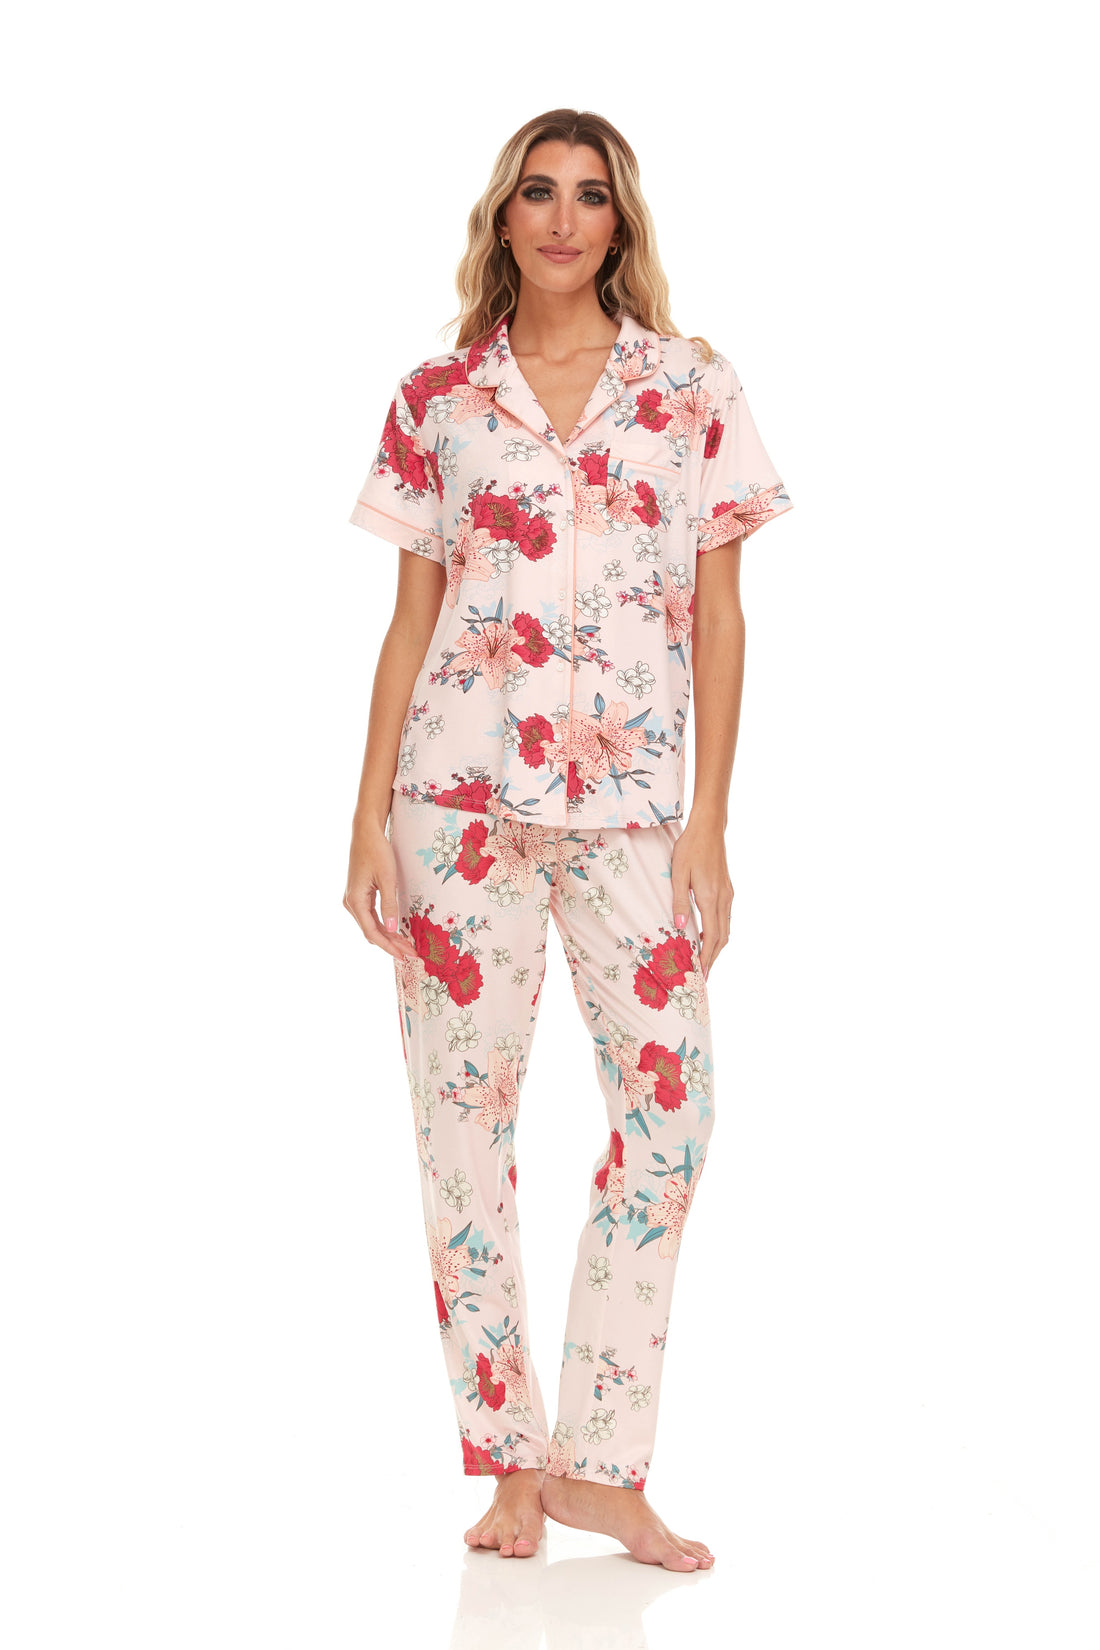 White Floral Pajama Set